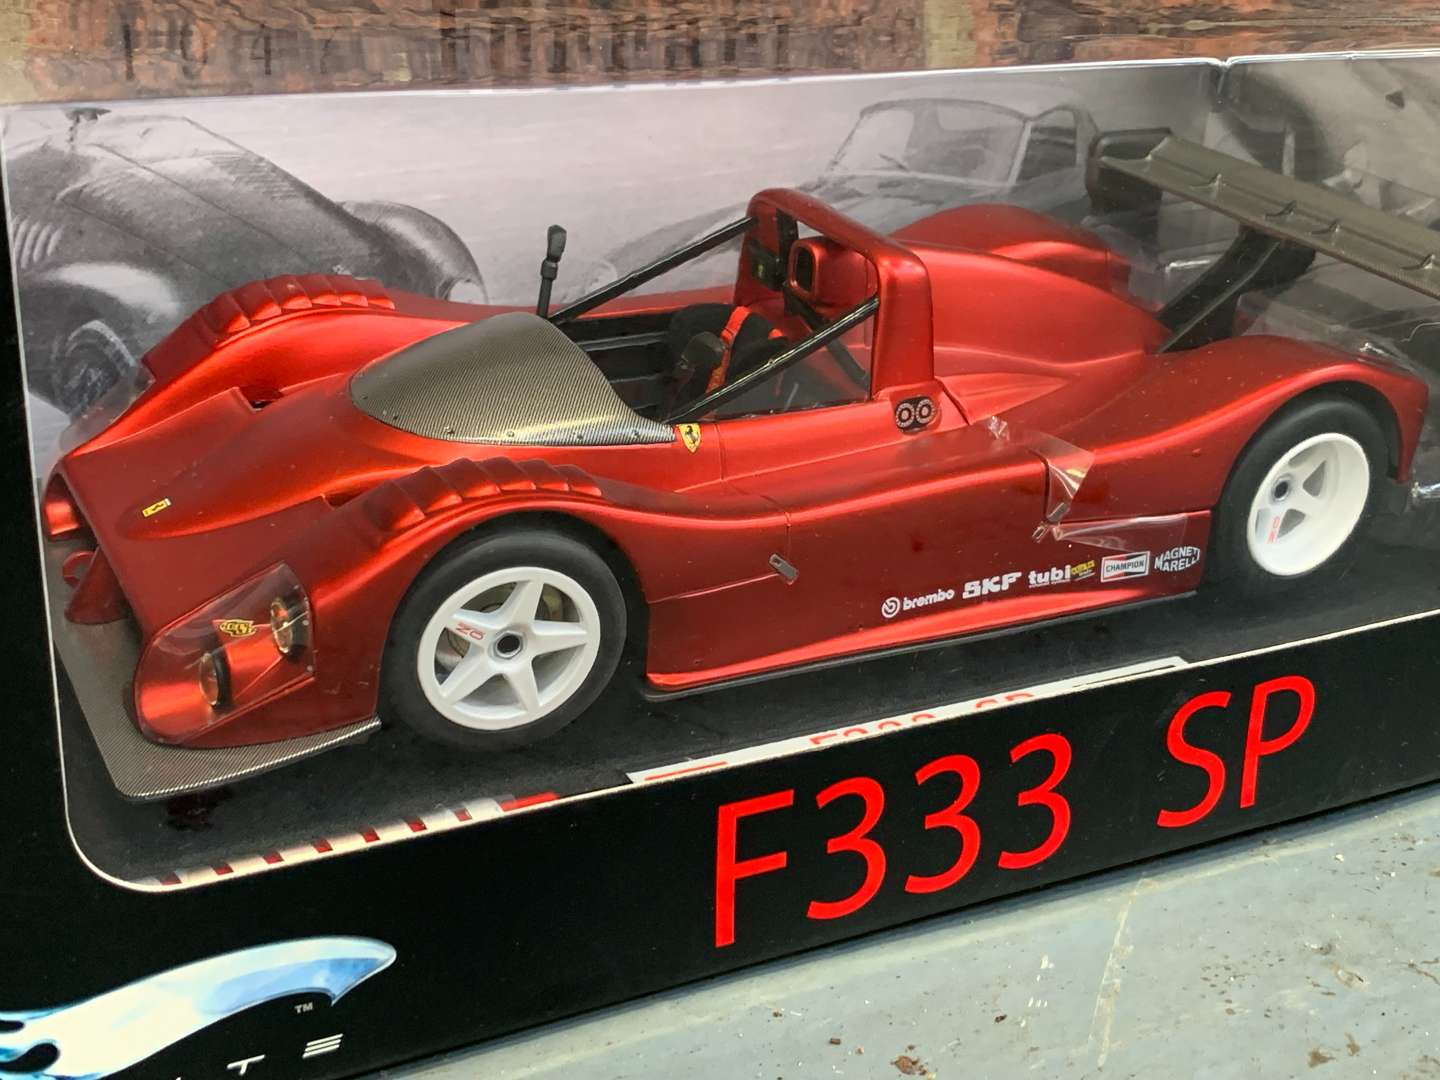 Boxed Elite Ferrari F333 SP Race Car 1:18 Scale - Image 3 of 3